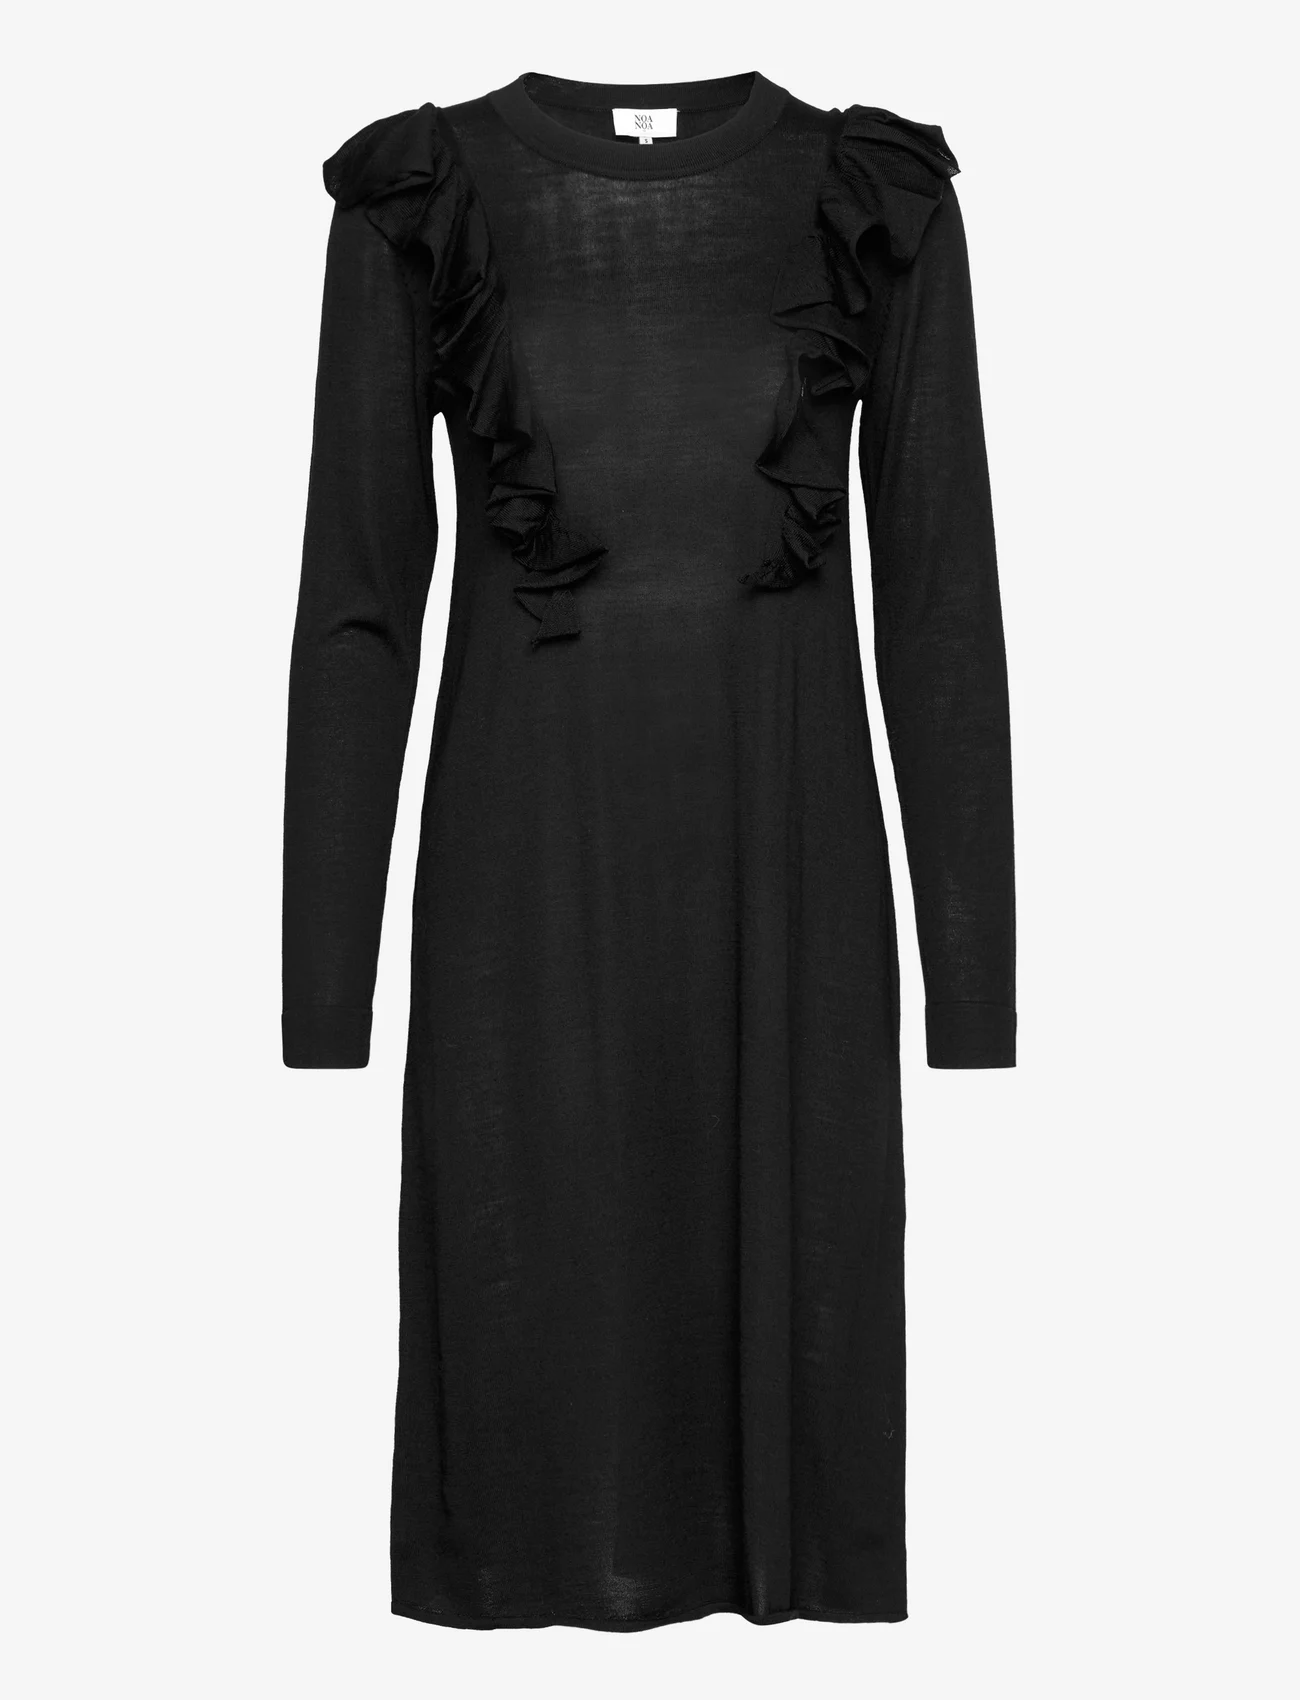 Noa Noa - Dress long sleeve - vidutinio ilgio suknelės - black - 0